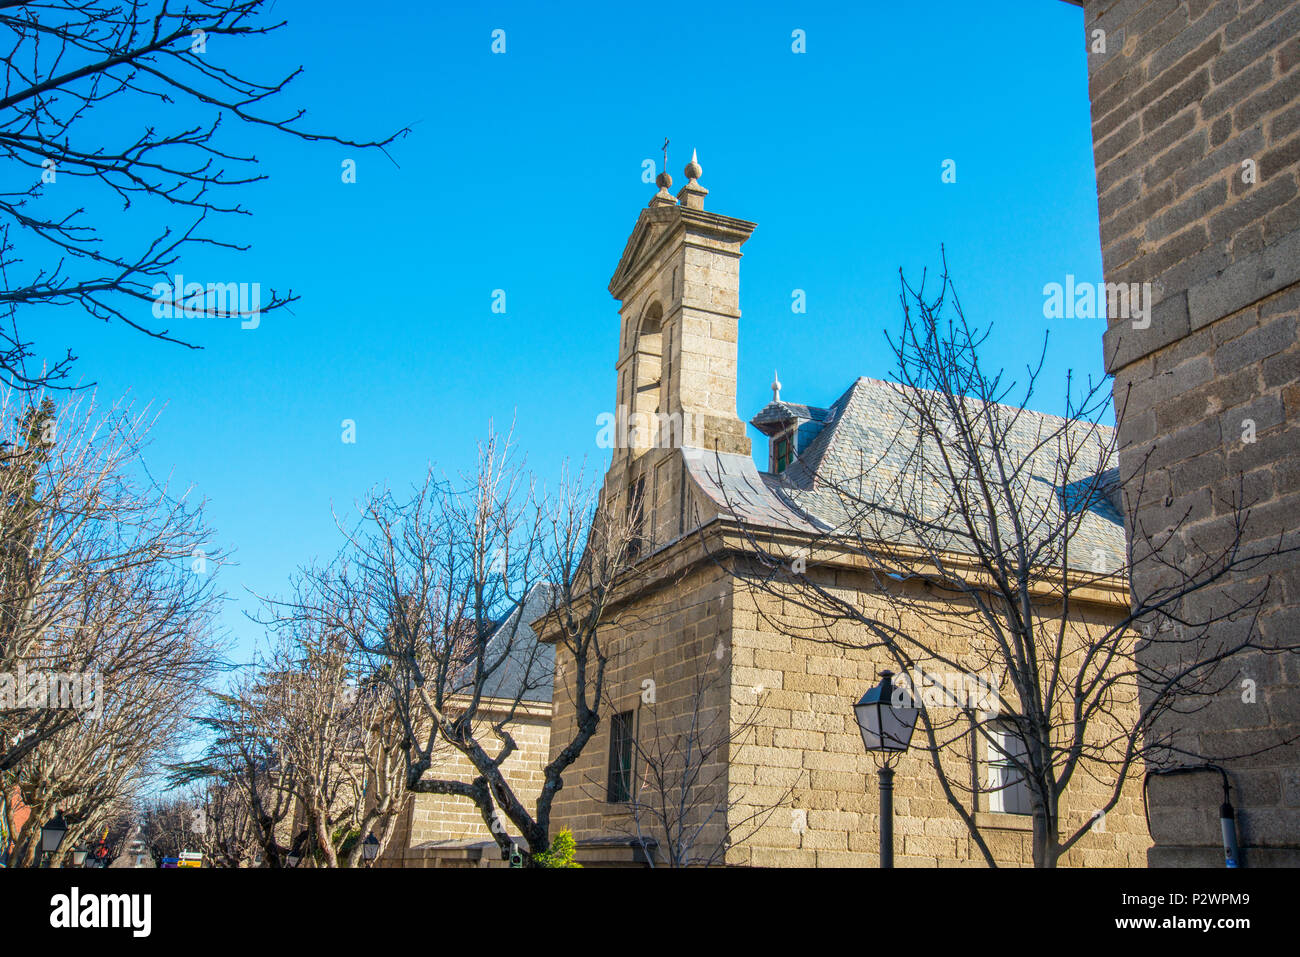 Chapel. San Lorenzo del Escorial, Madrid province, Spain. Stock Photo